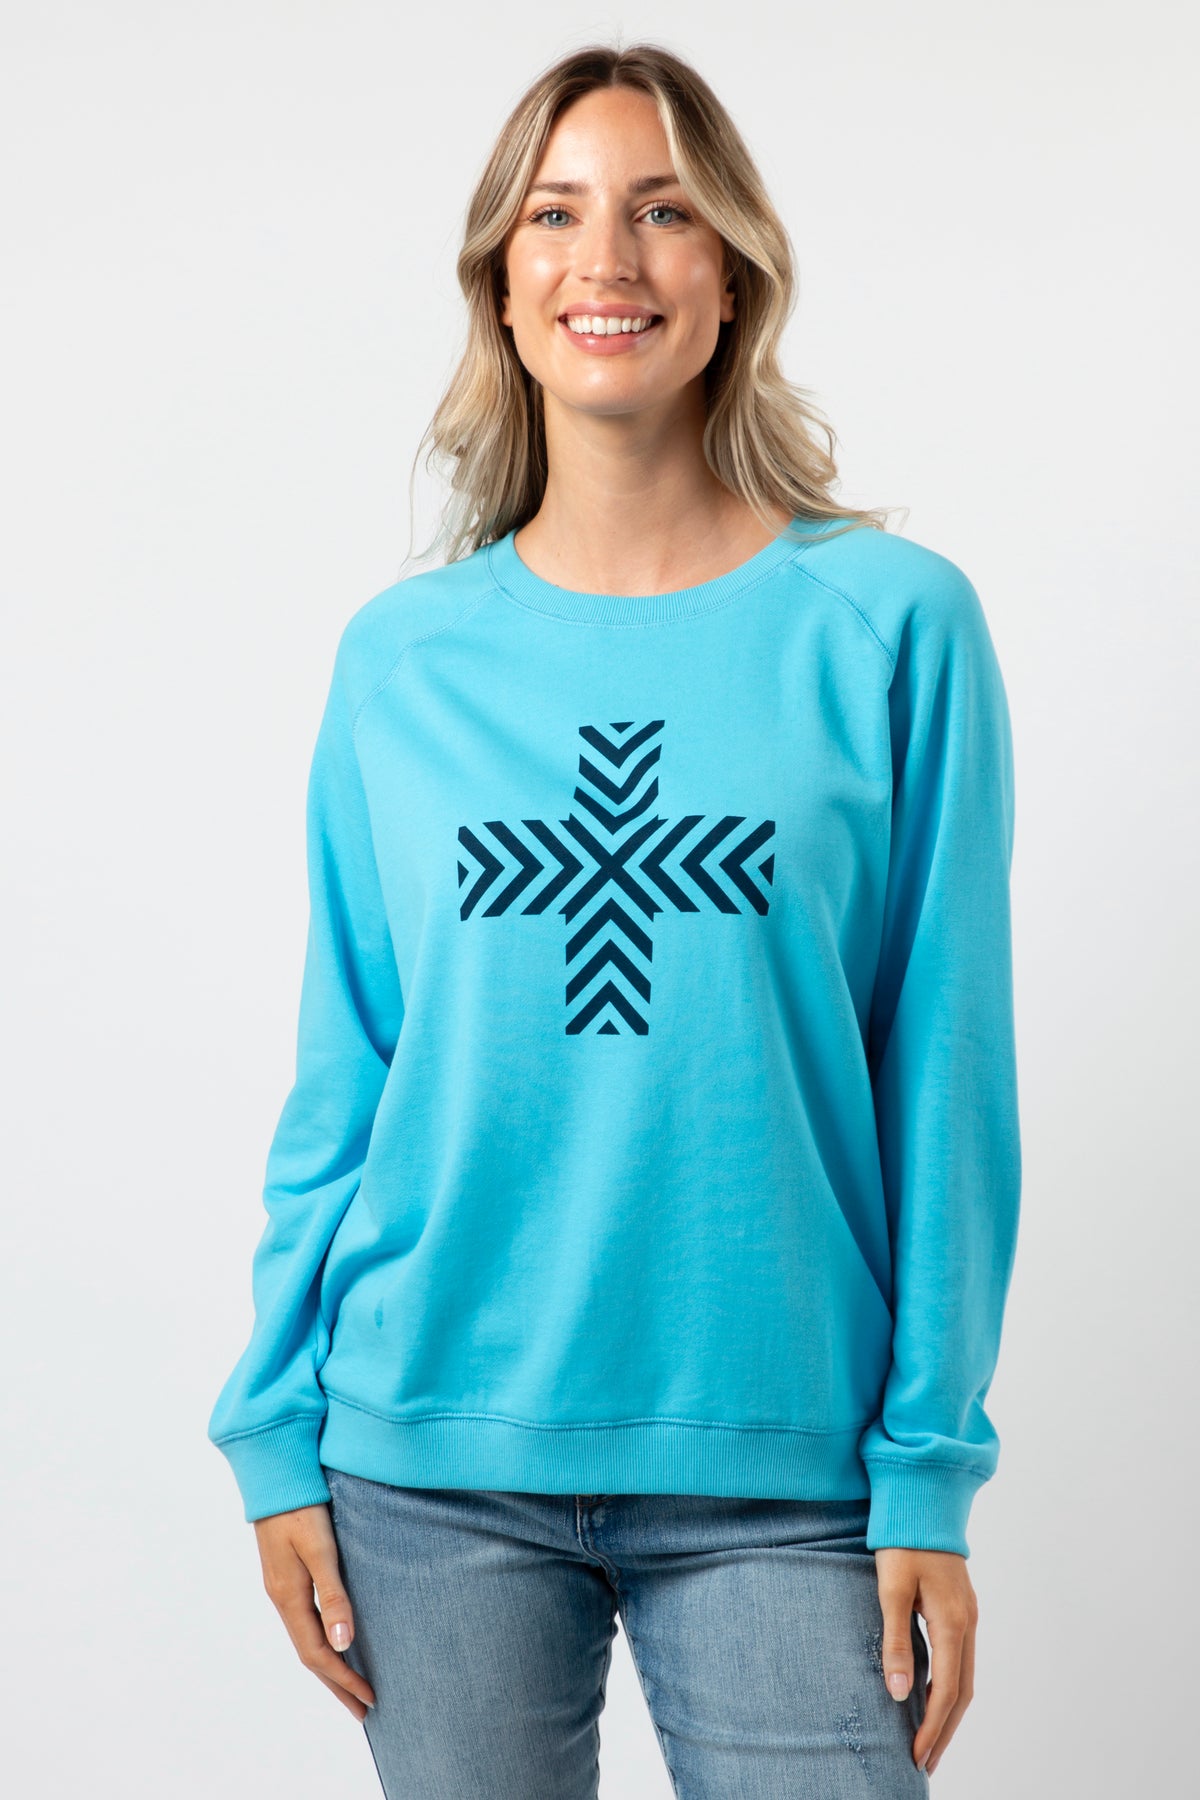 Classic Sweater Sky Blue With Chervon Cross